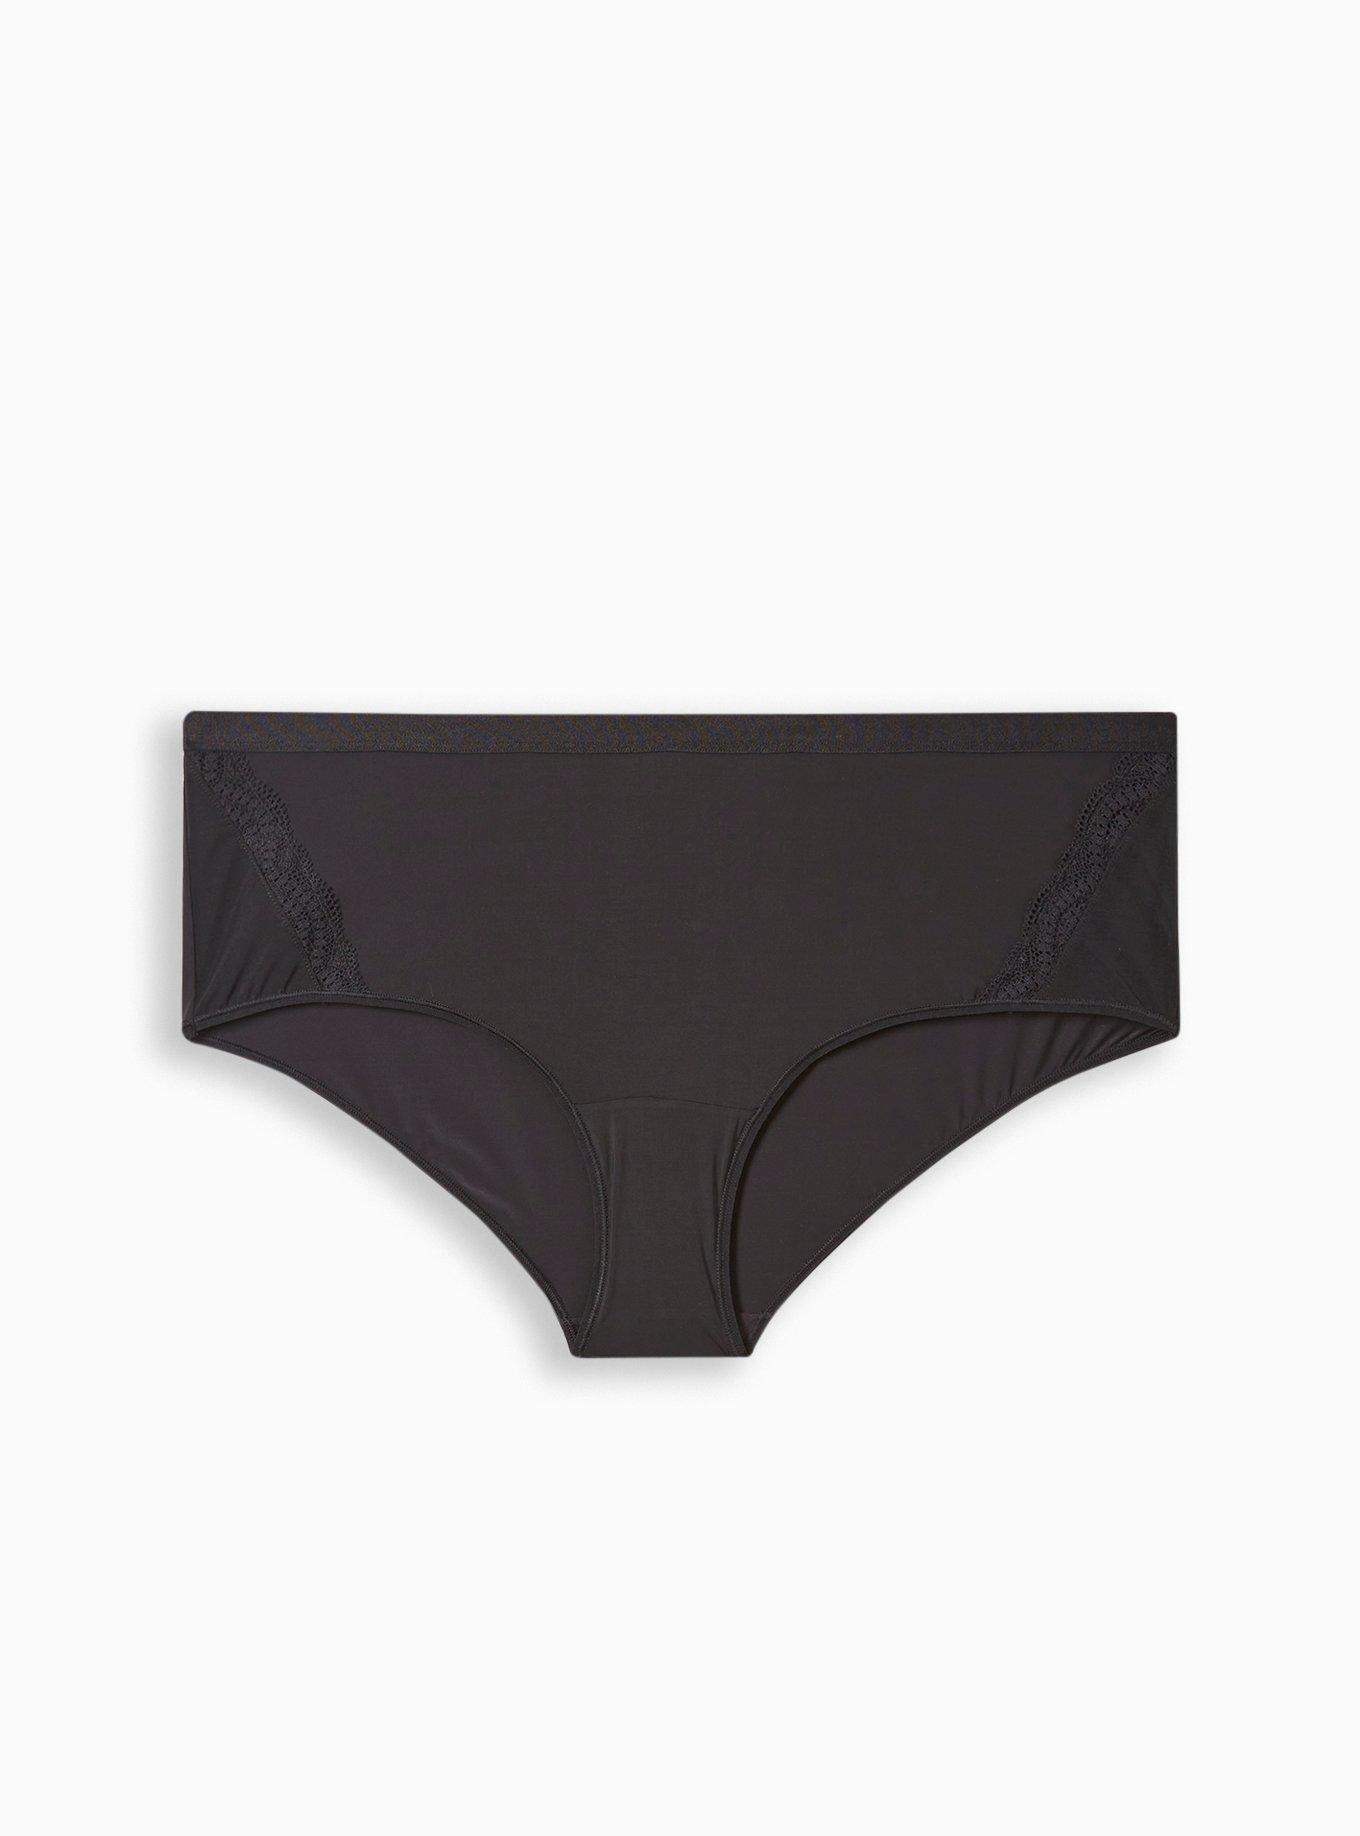 Torrid Cheeky Panties Underwear Halloween Fangs Lips Bats Black